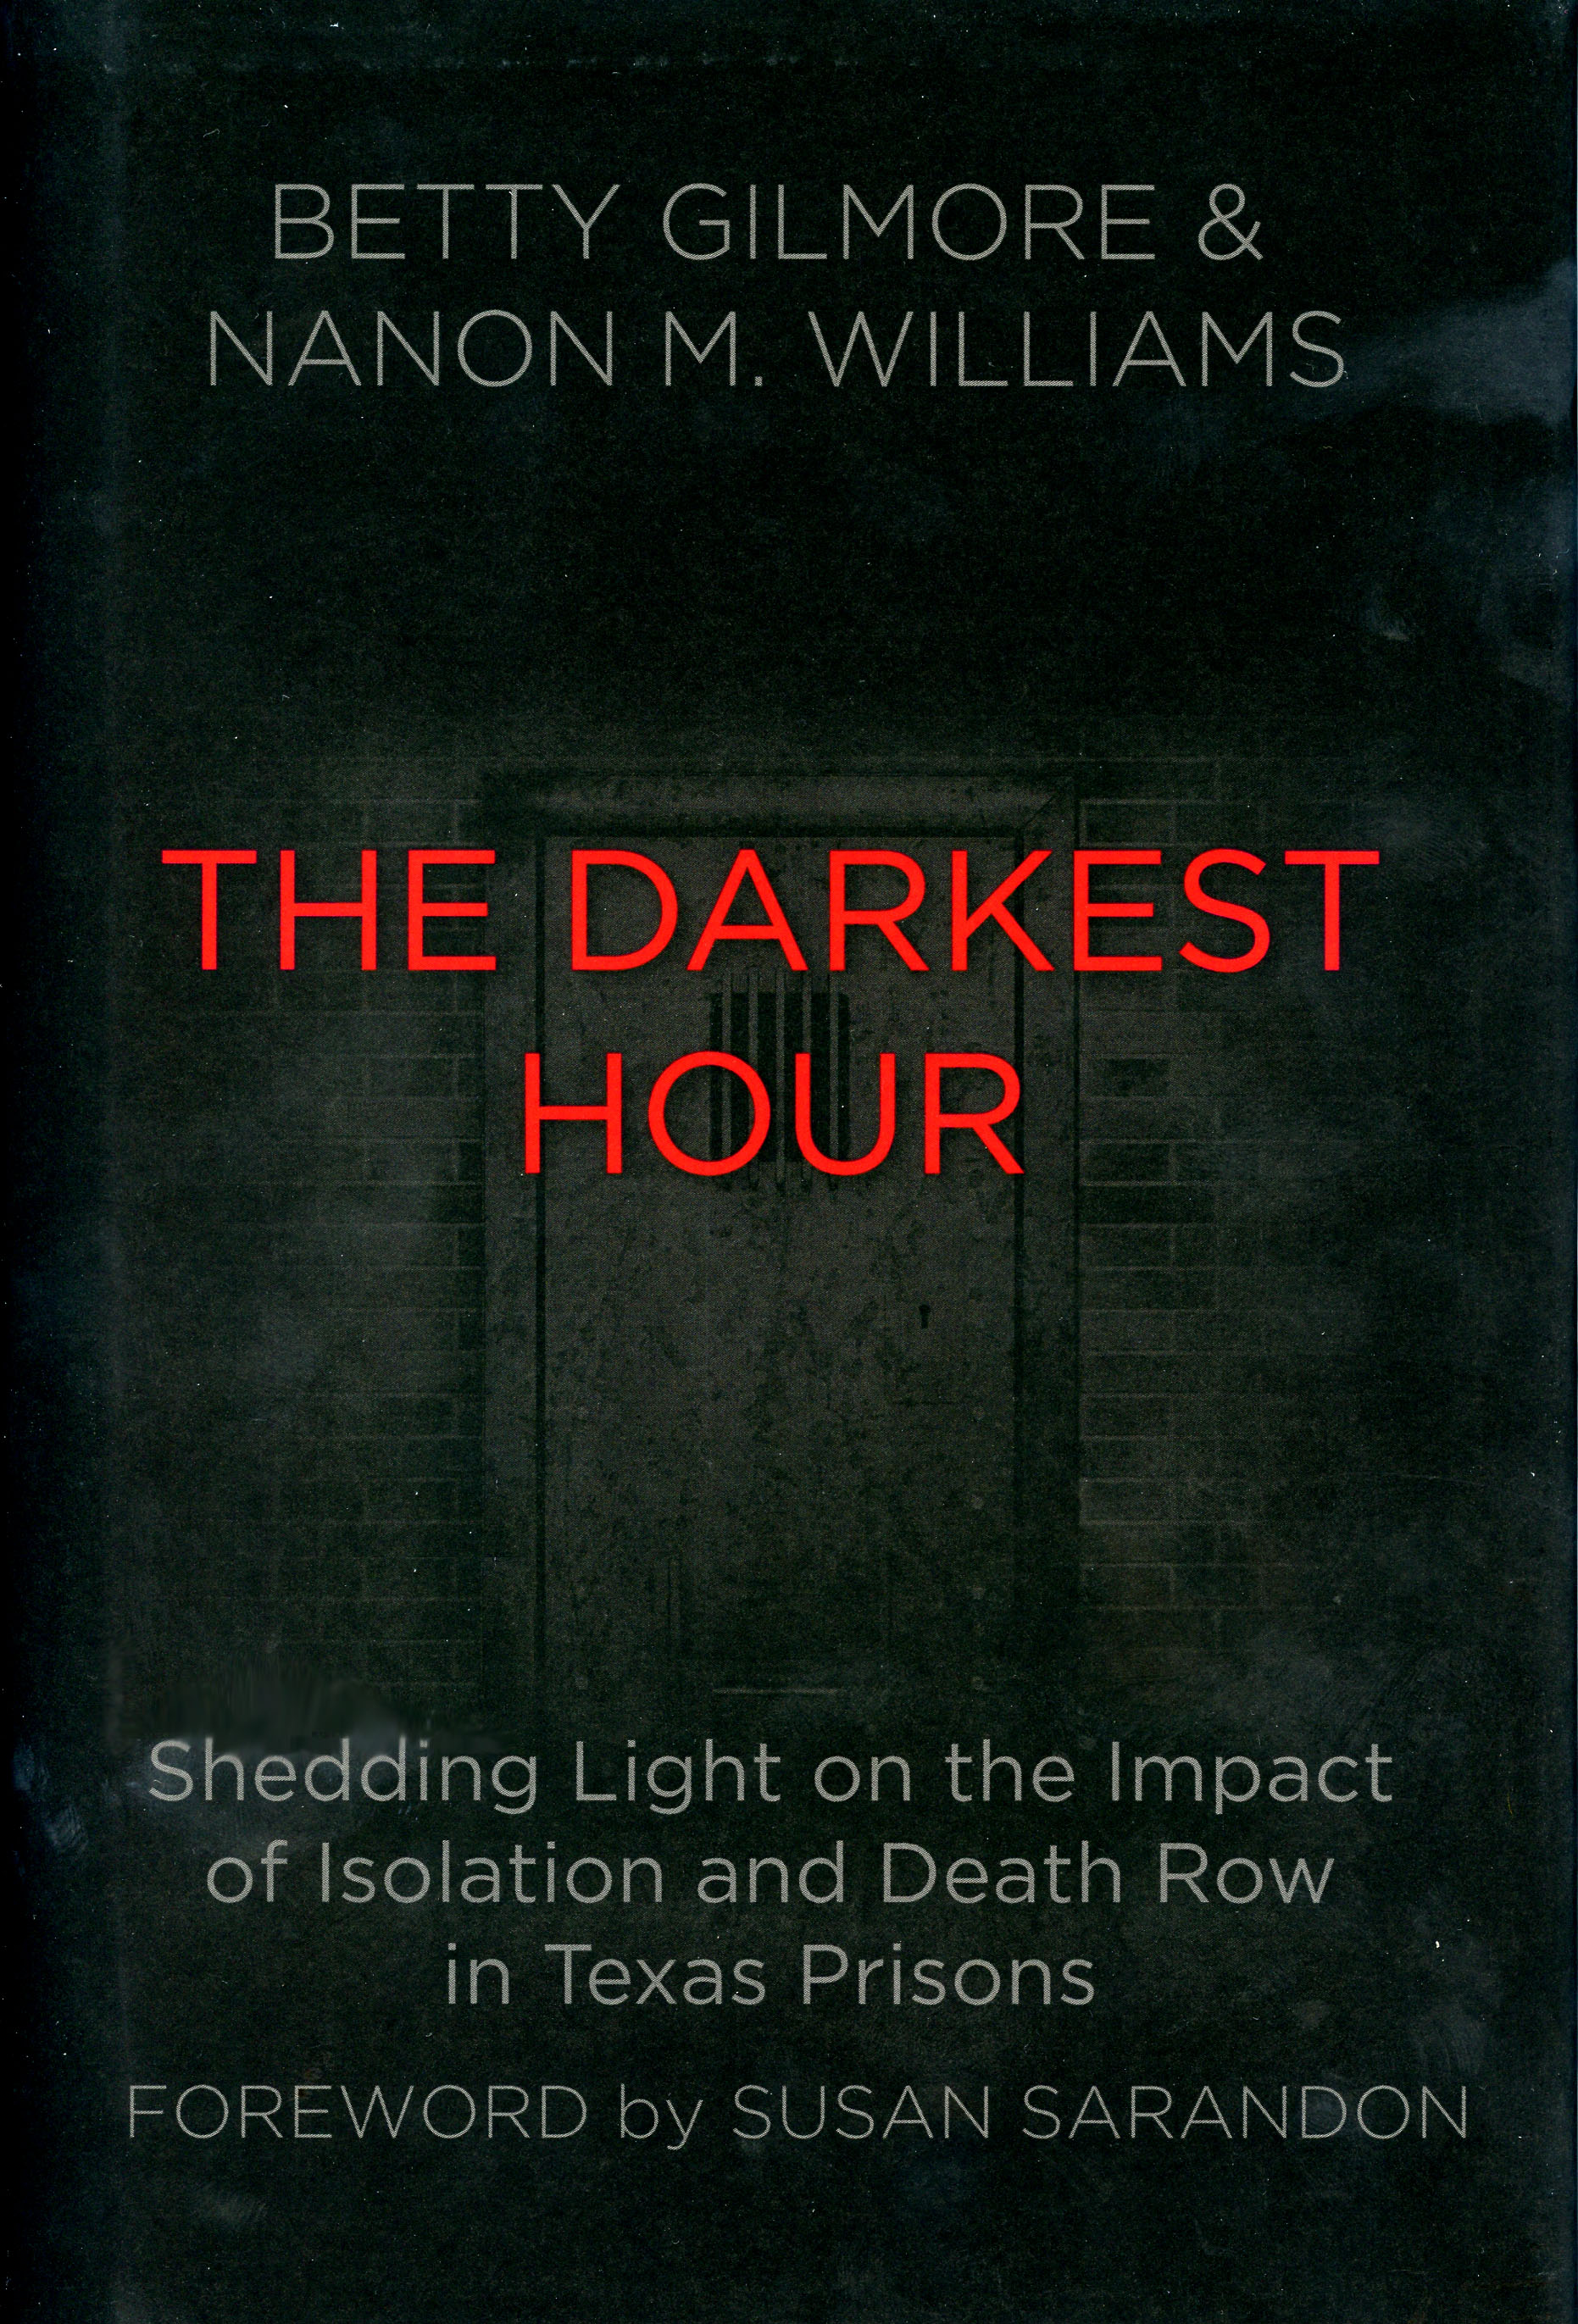 The Darkest Hour bookcover